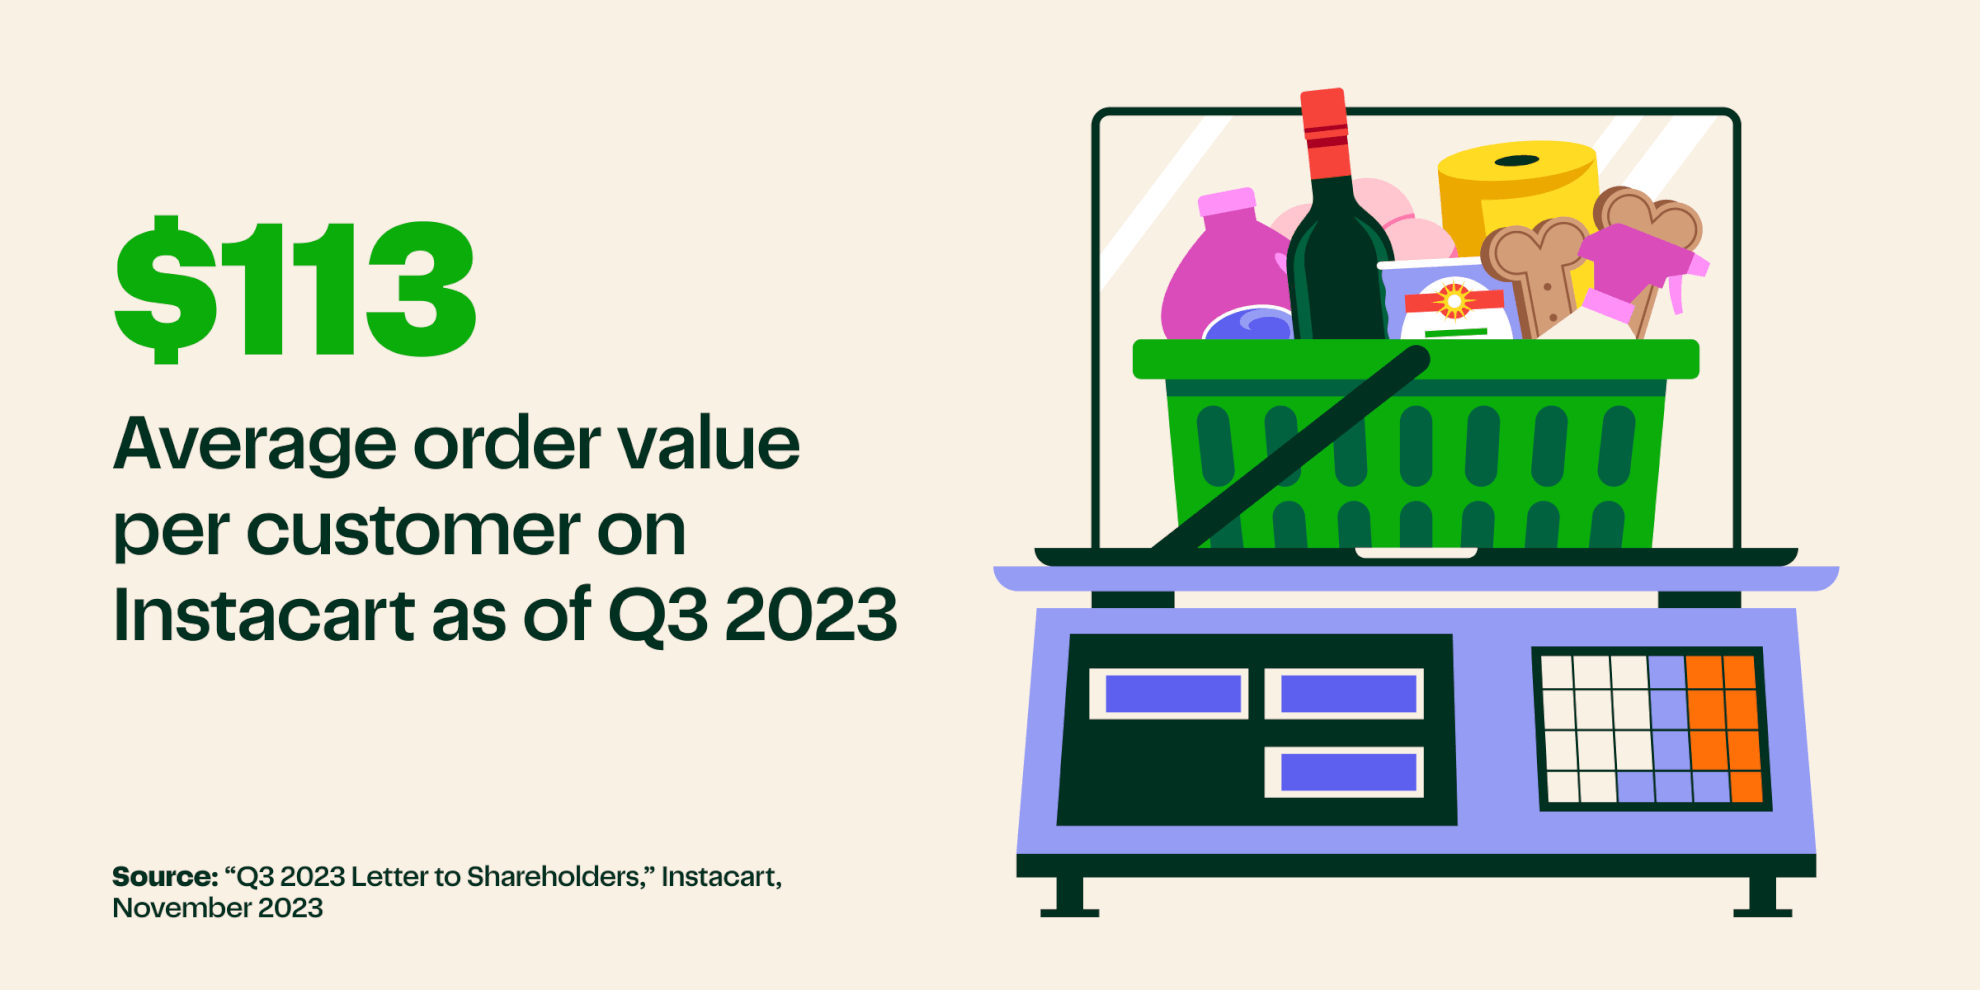 $113 Average order value per customer on Instacart as of Q3 2023